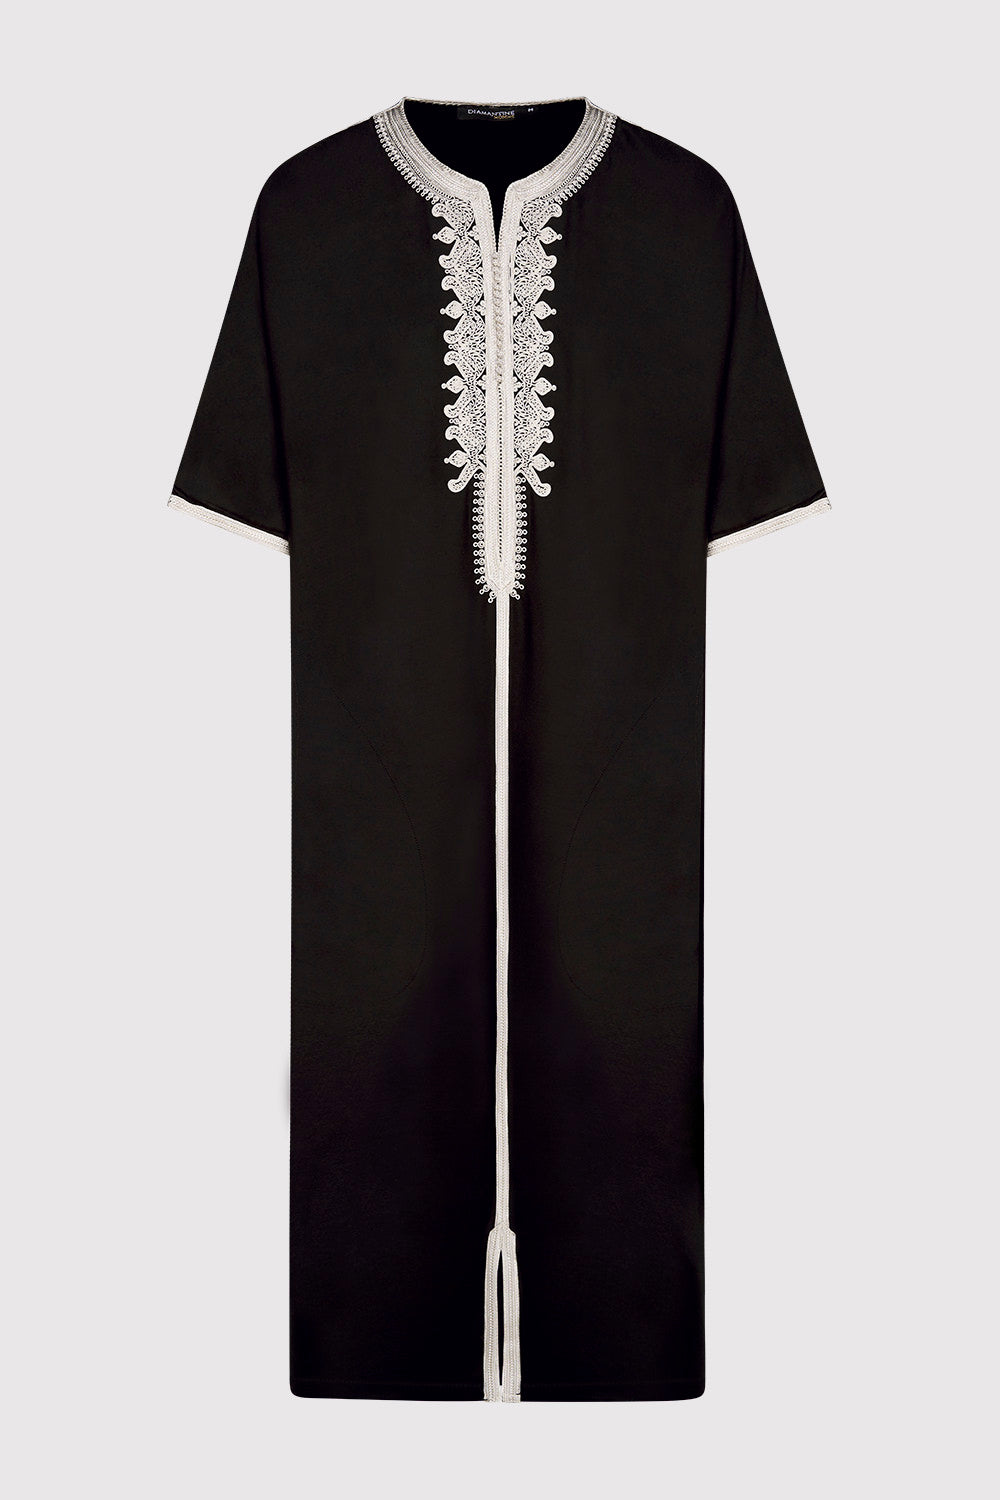 Gandoura Hamza Embroidered Short Sleeve Men's Long Robe Thobe in Black